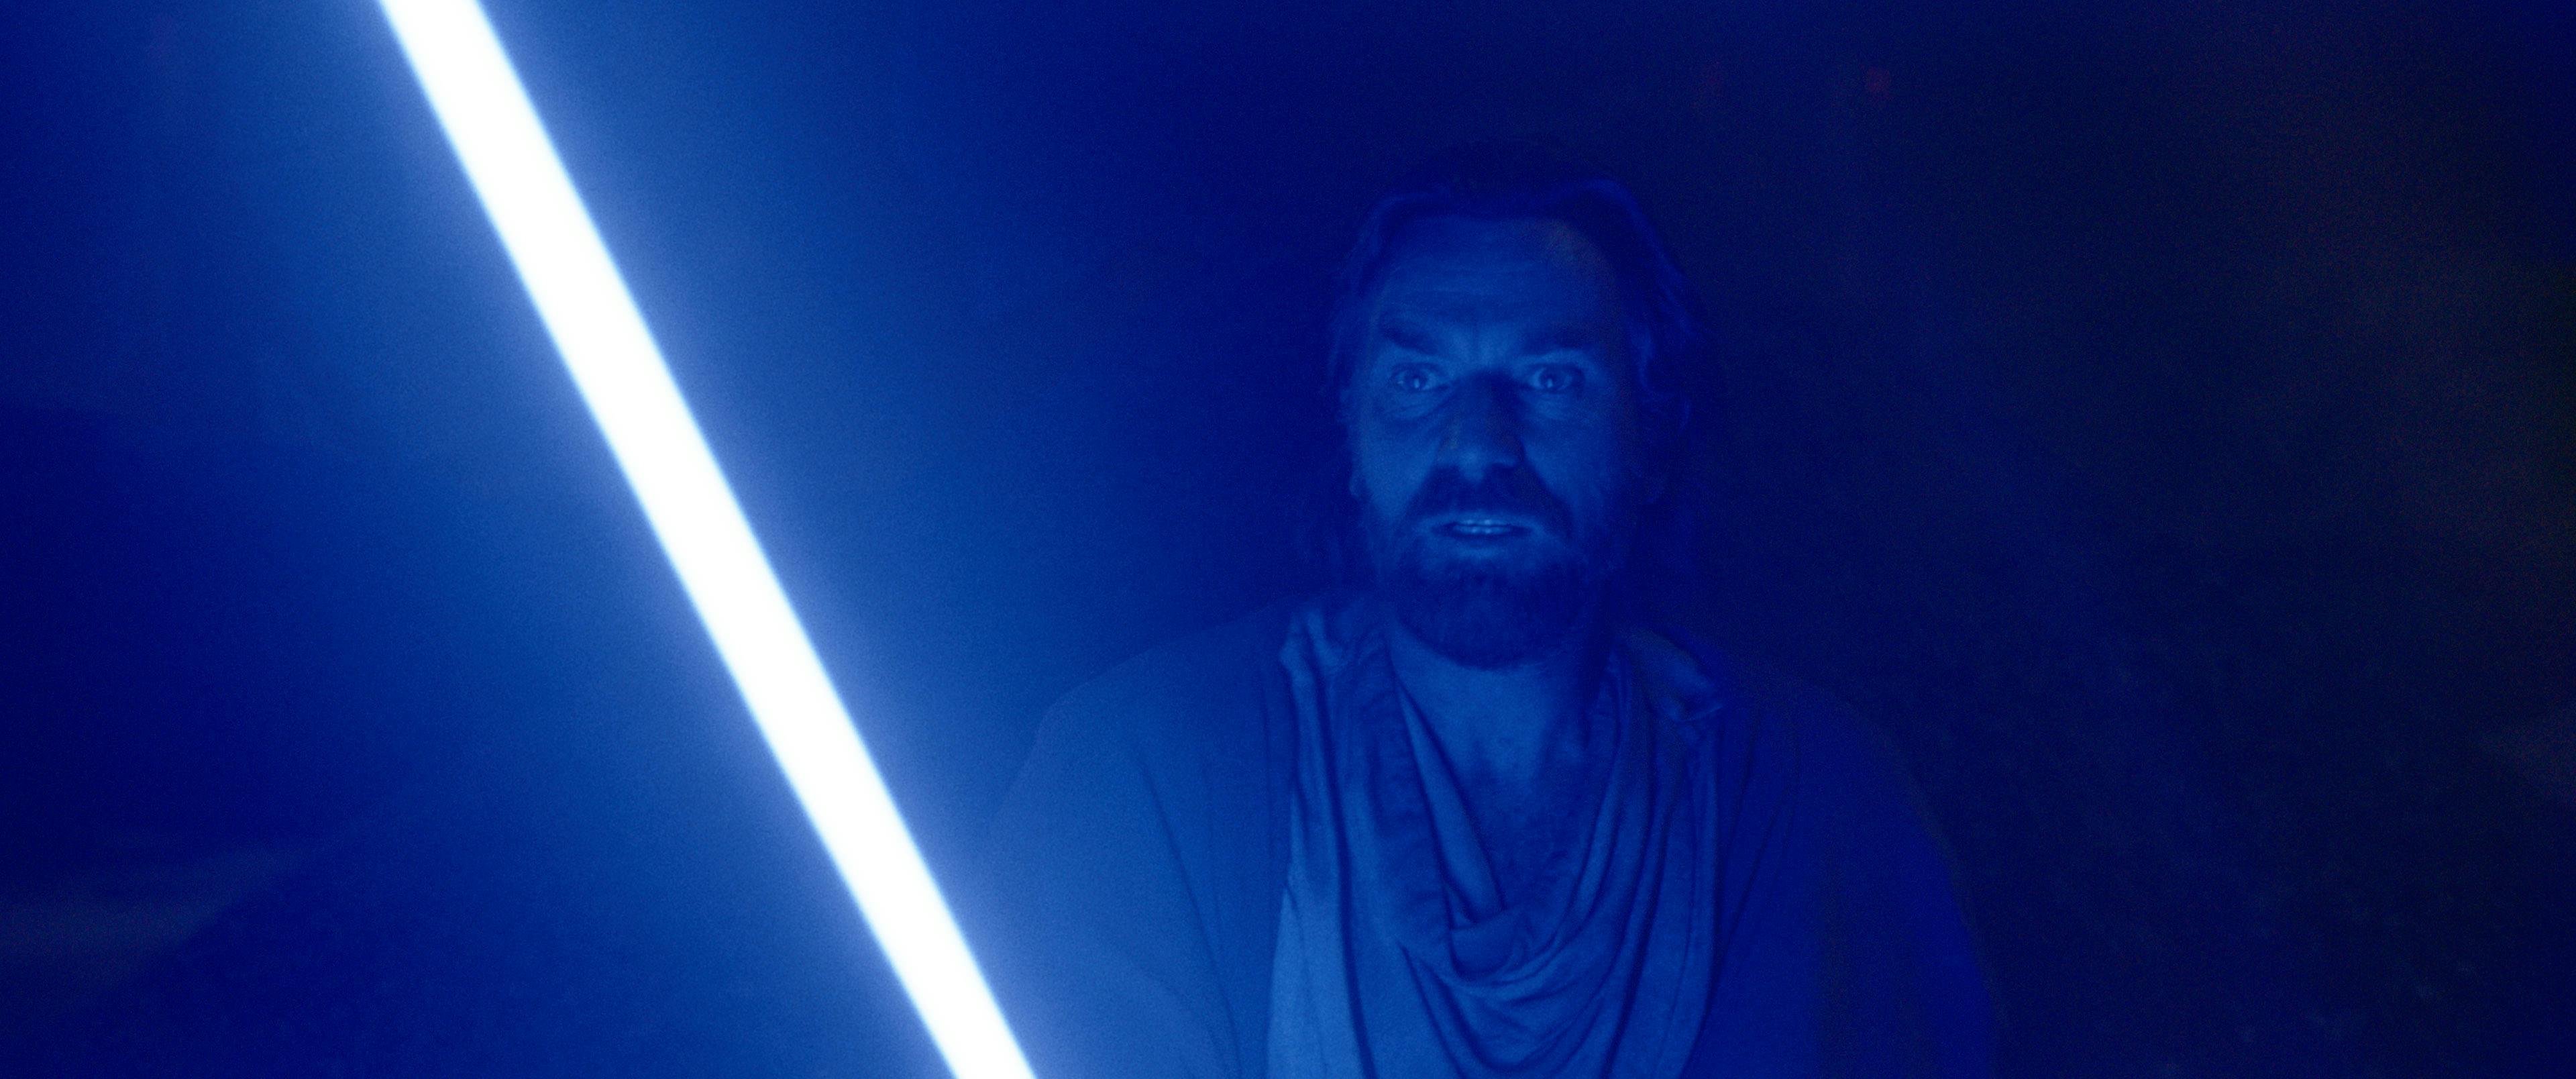 Star Wars' Backs 'Obi-Wan Kenobi's Moses Ingram as She Calls Out Racist  Attacks